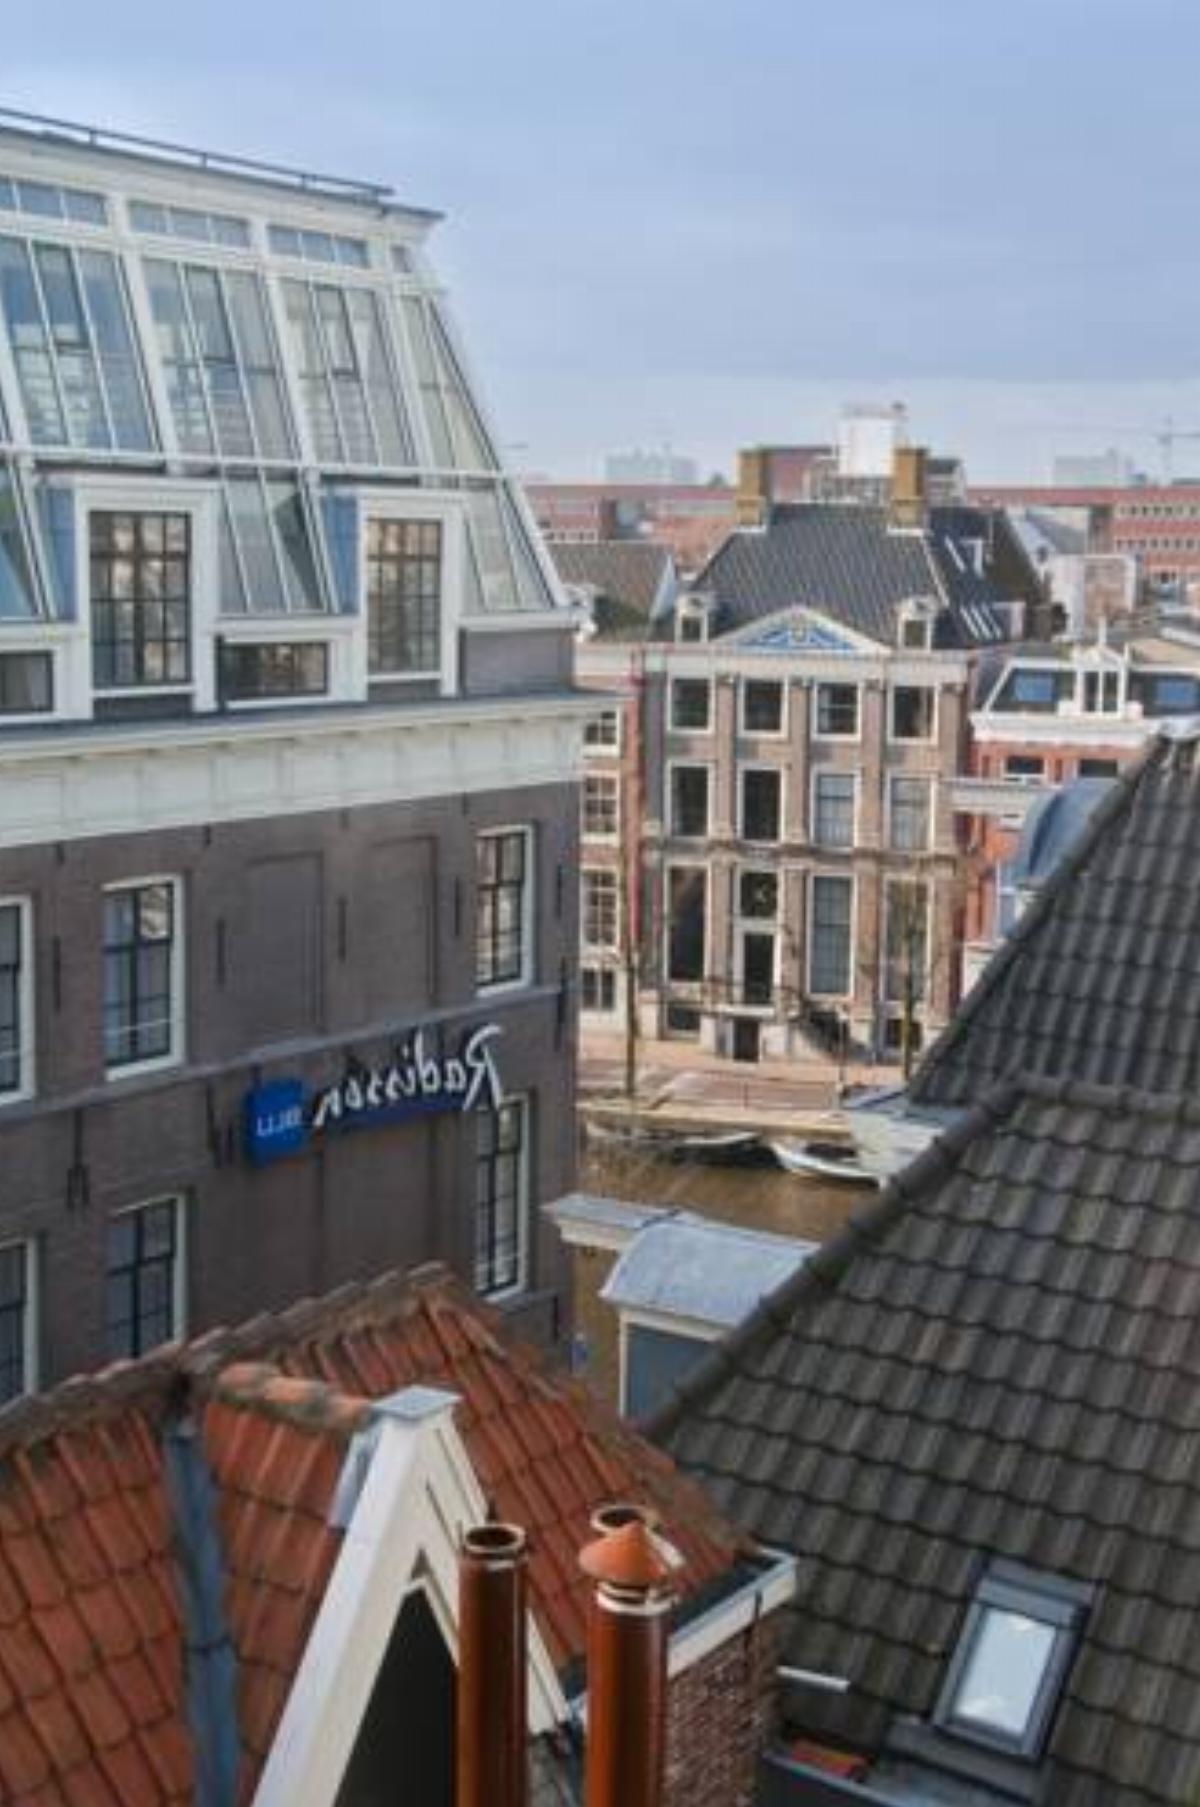 Radisson Blu Hotel, Amsterdam Hotel Amsterdam Netherlands